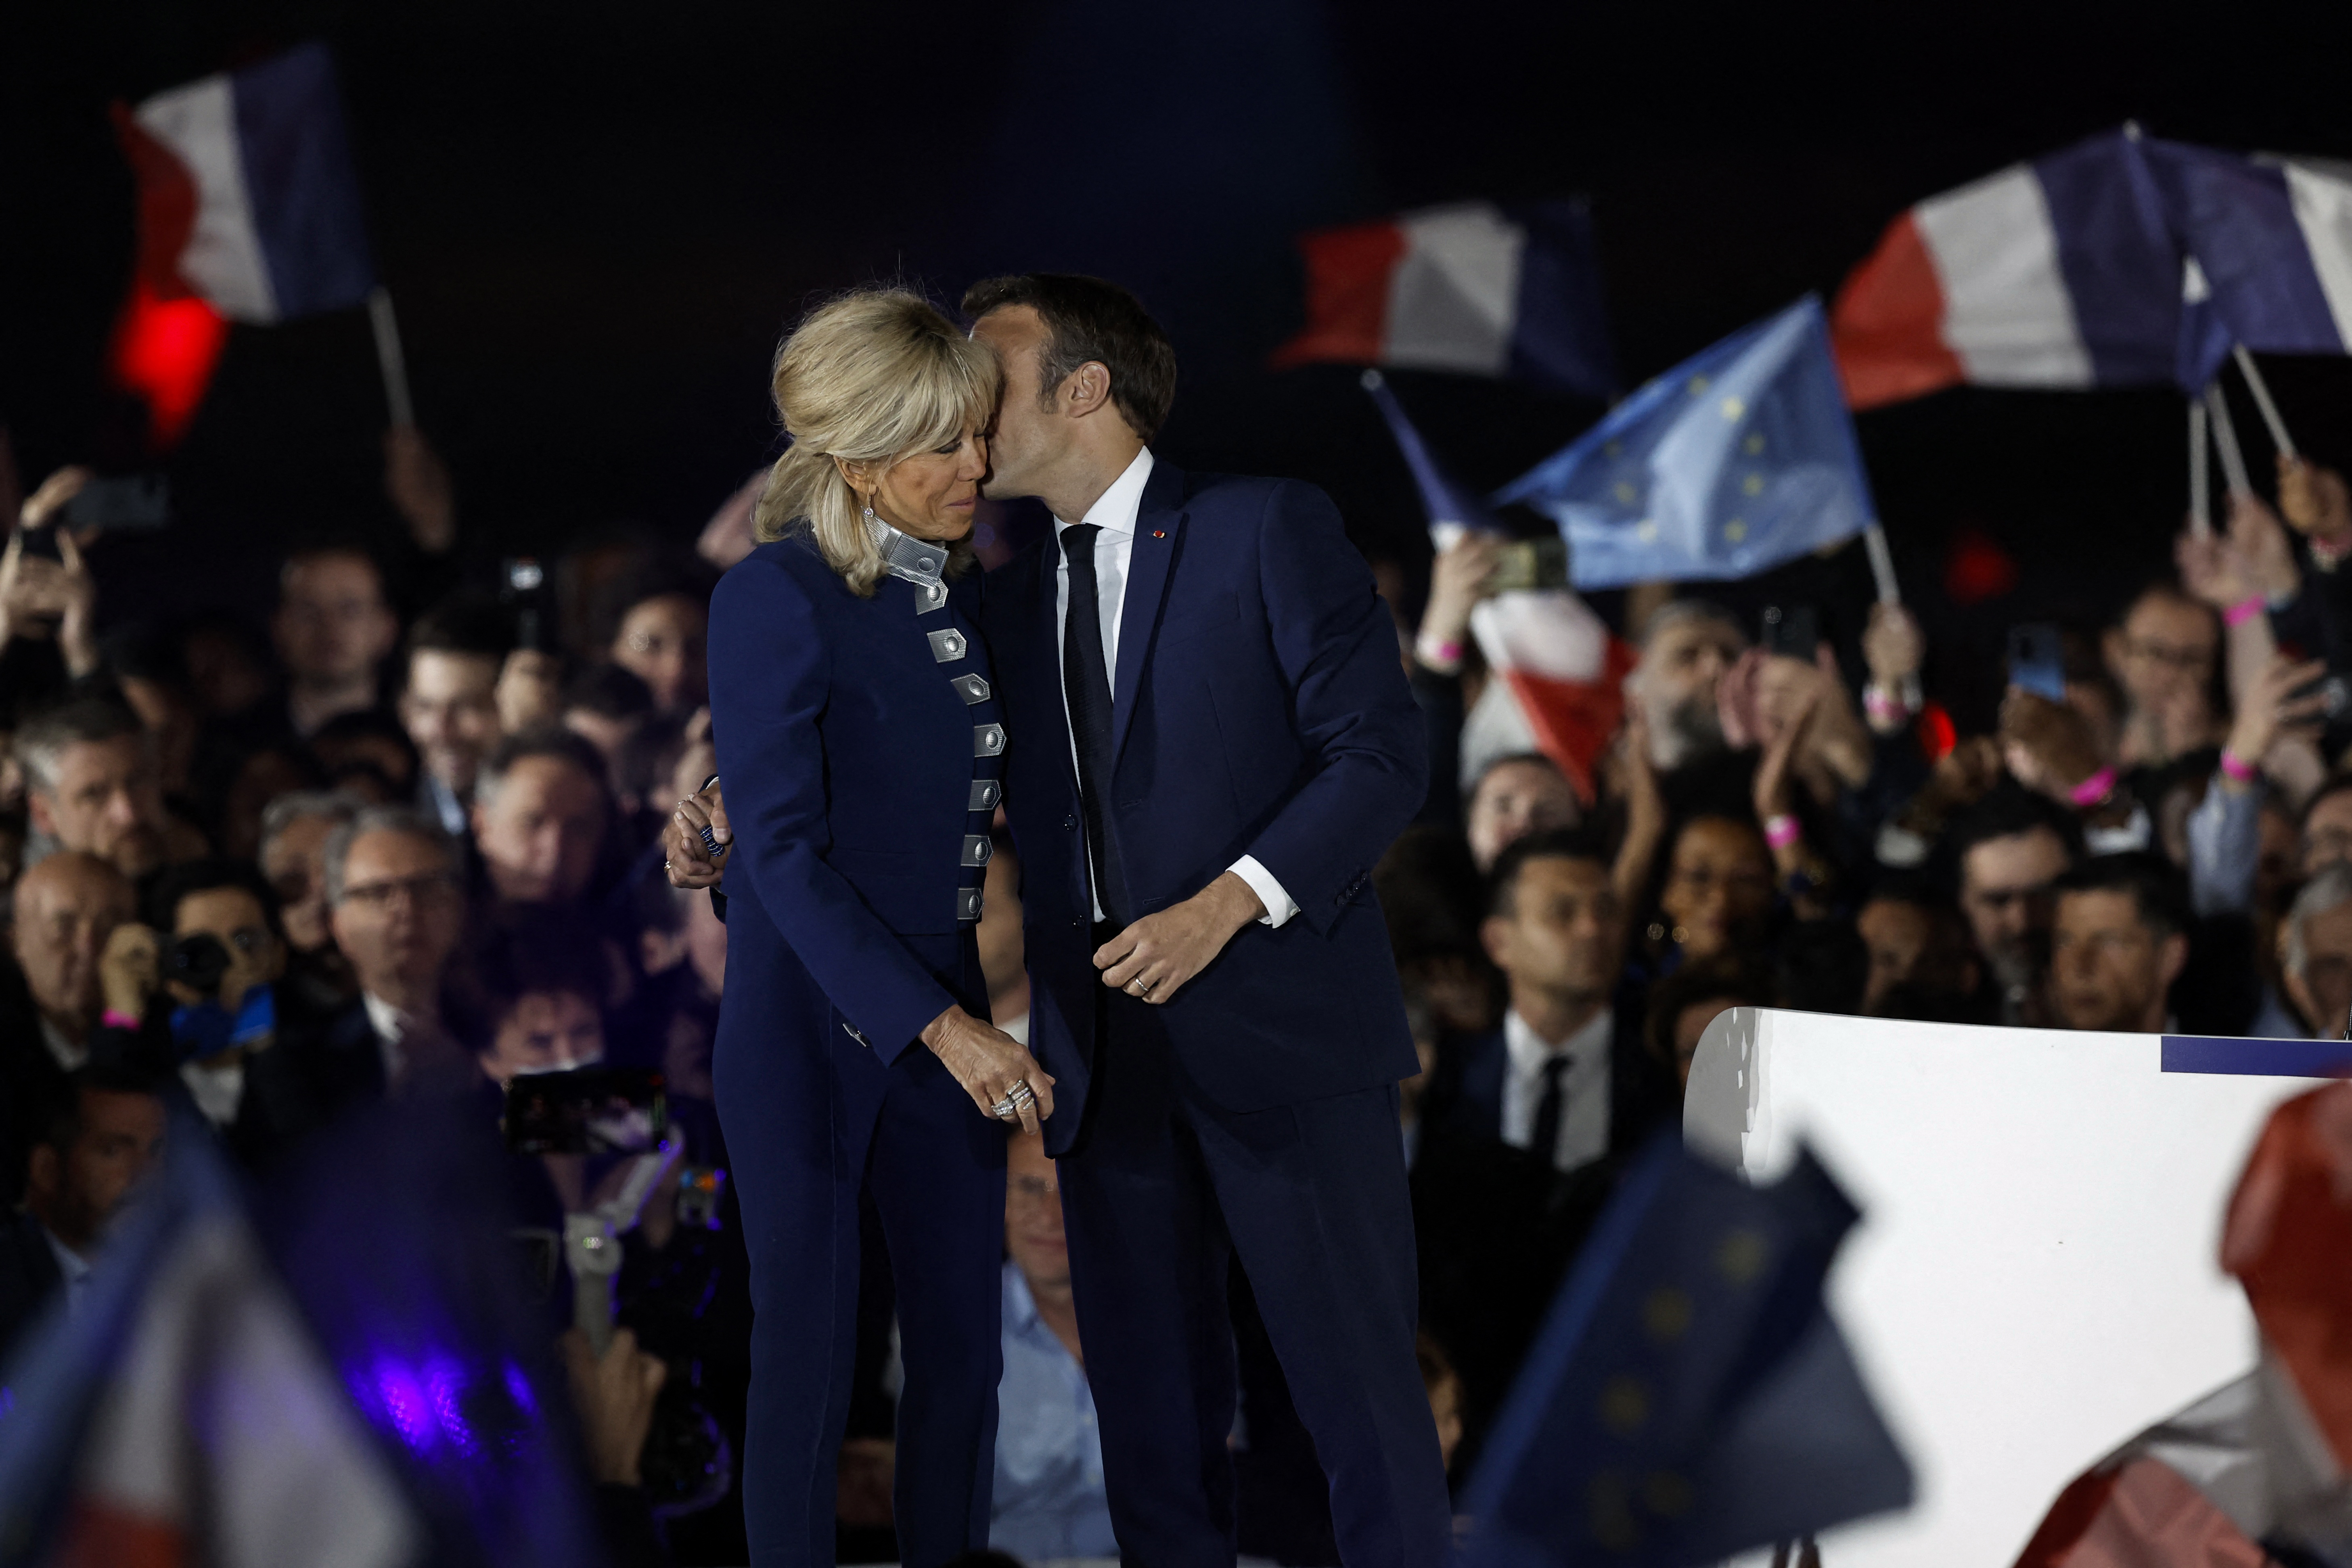 Macron embrasse sa femme, la première dame française Brigitte Macron